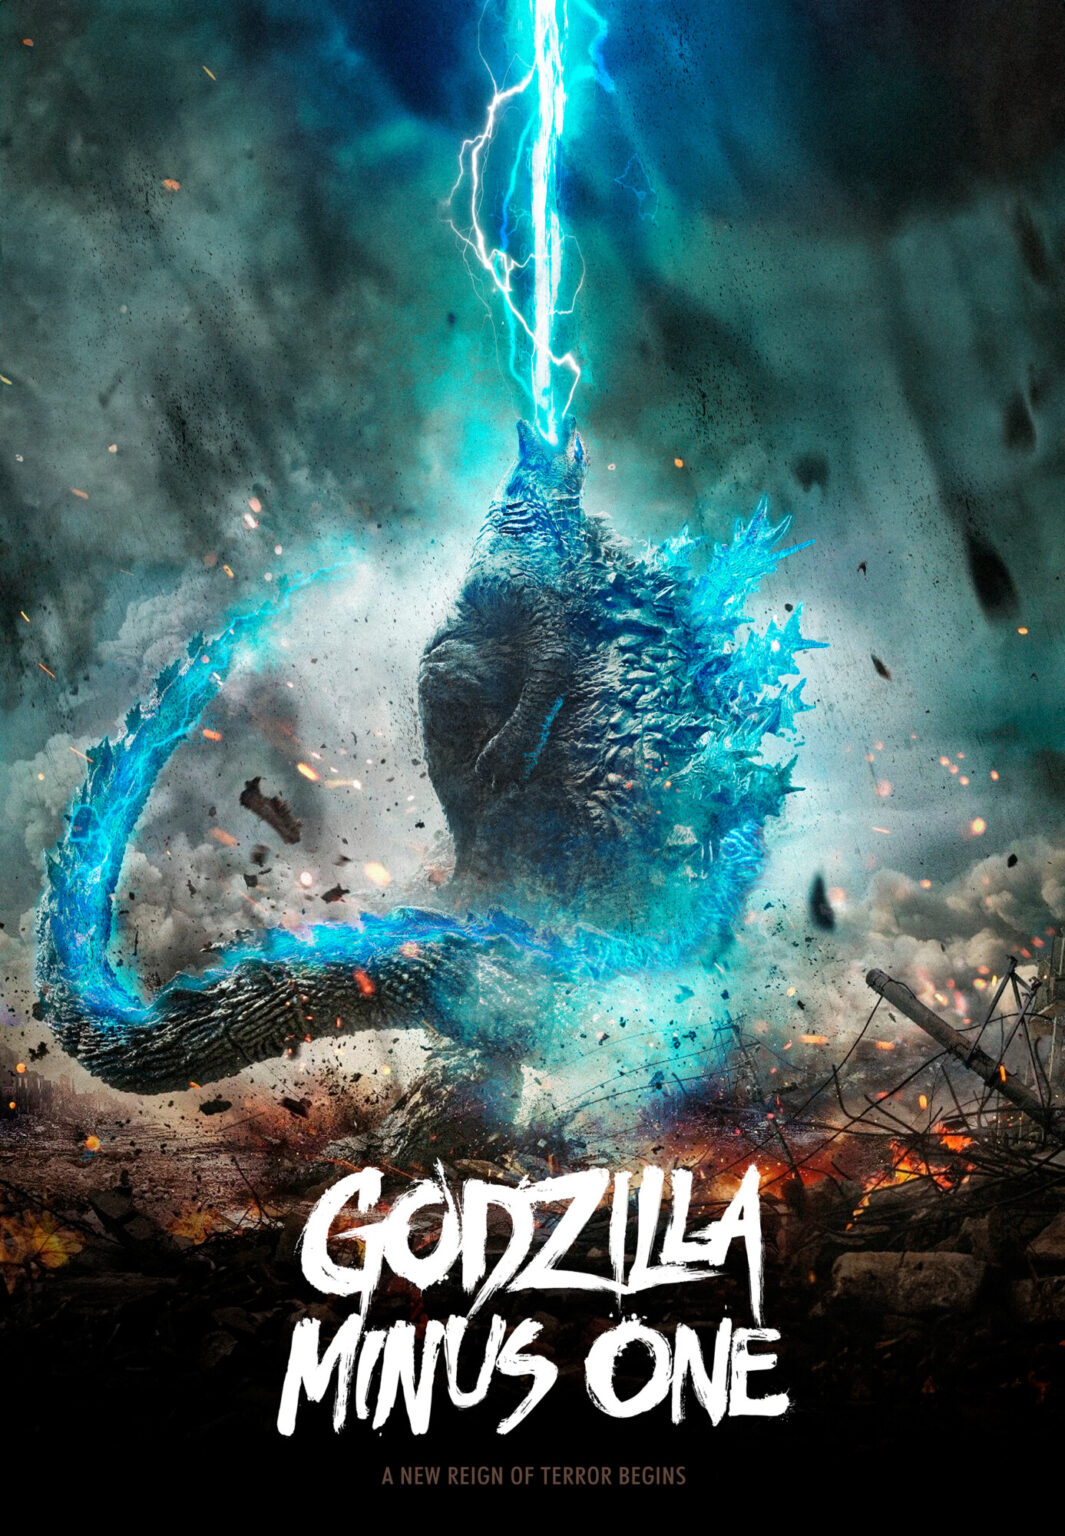 Godzilla Minus One Killer Movie Reviews 3258